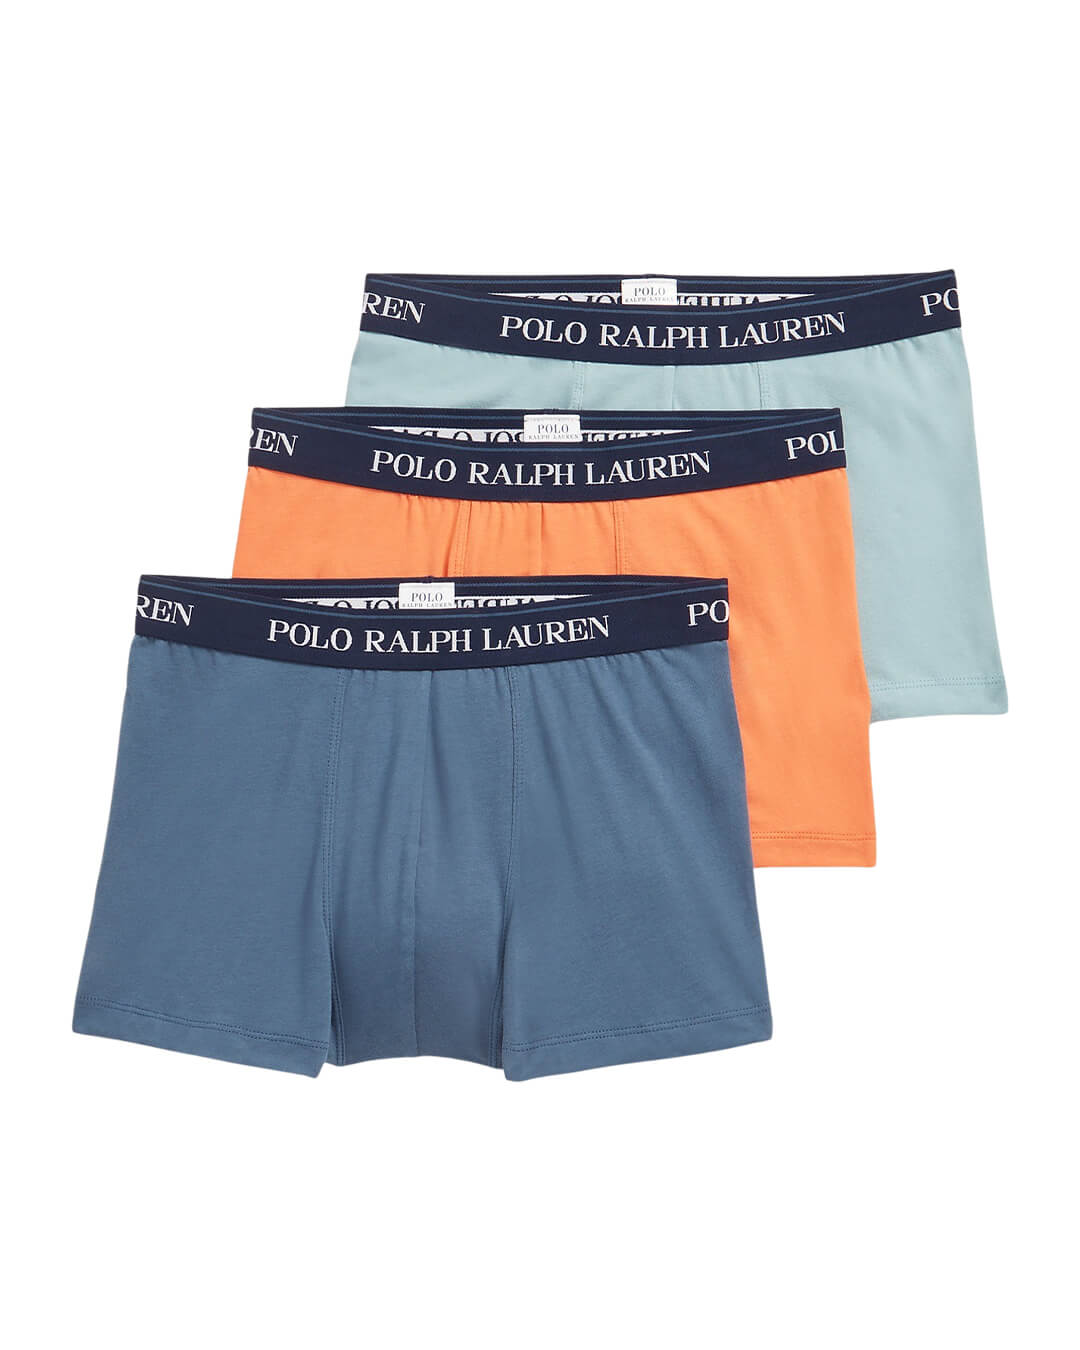 Polo Ralph Lauren Underwear Polo Ralph Lauren Classic Stretch Cotton Blue Mix Trunk 3-Pack